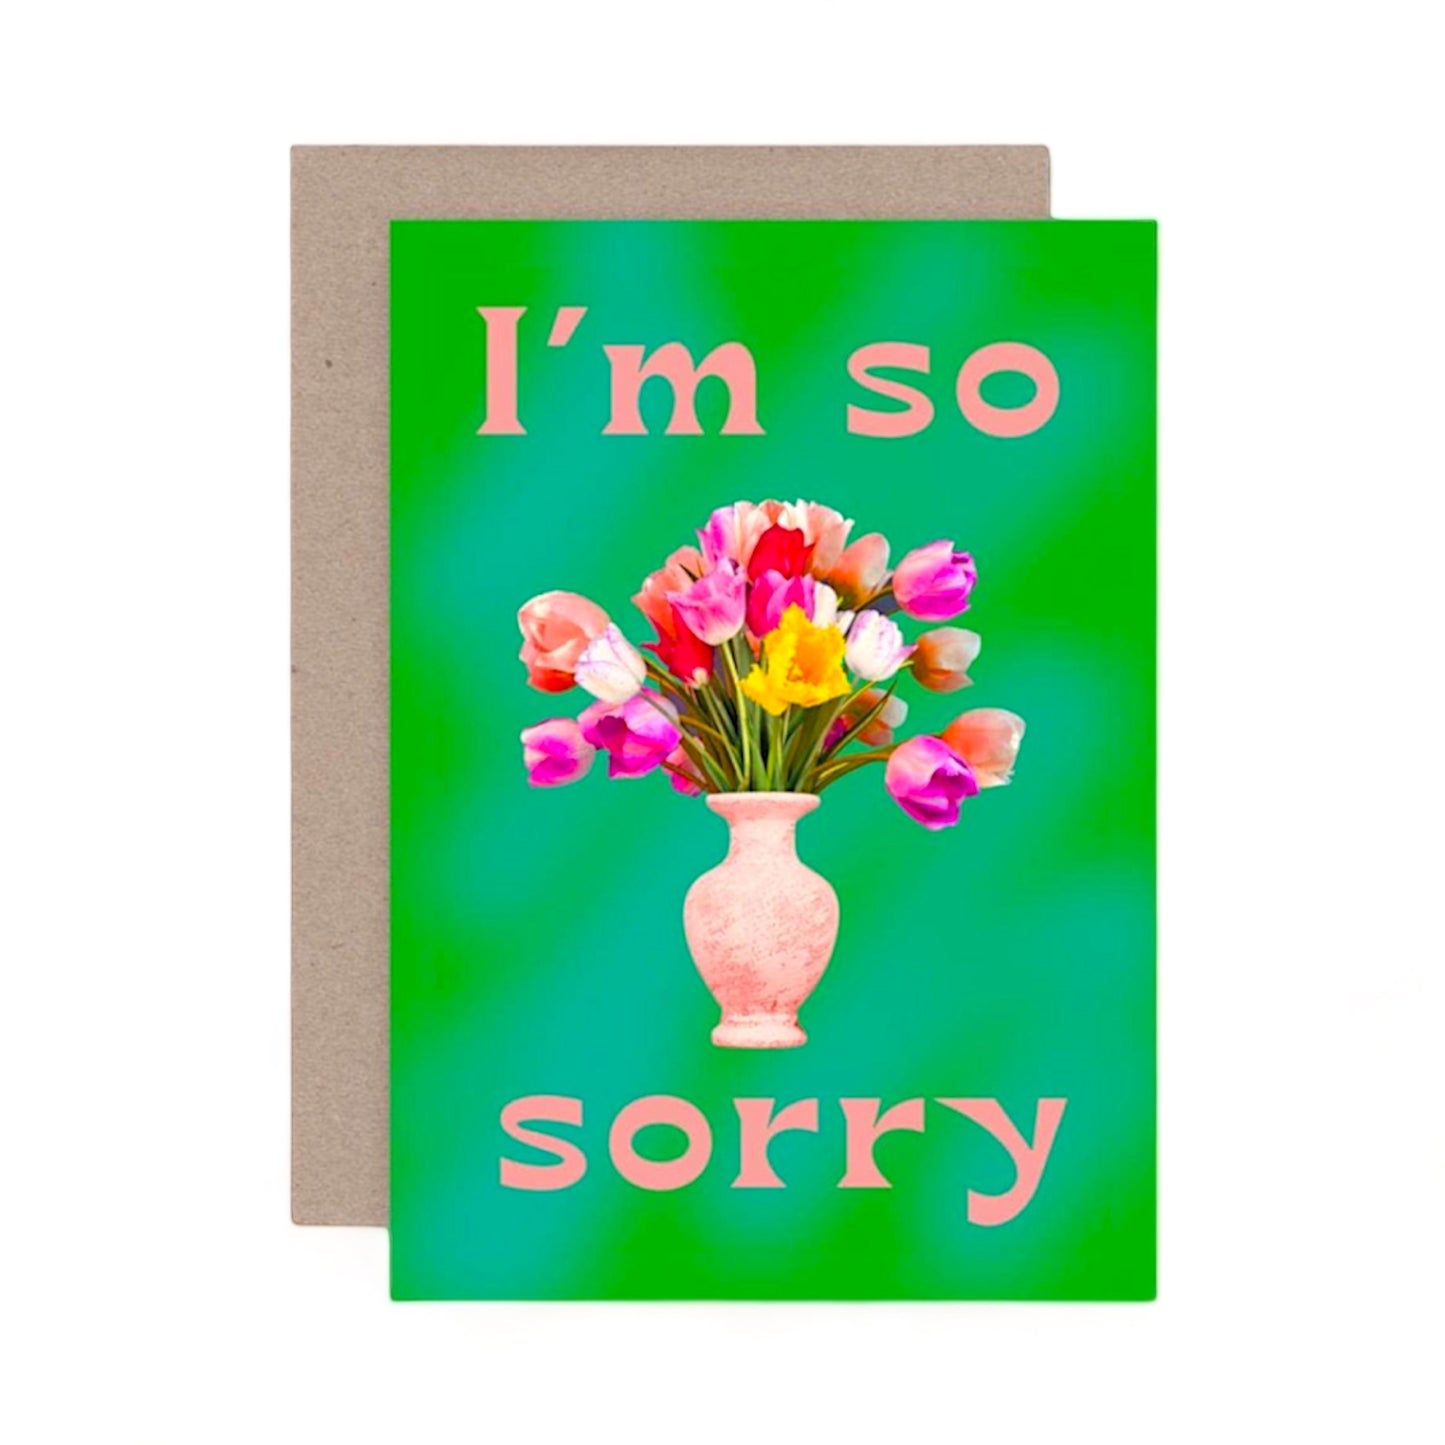 I’m So Sorry - Greeting Card